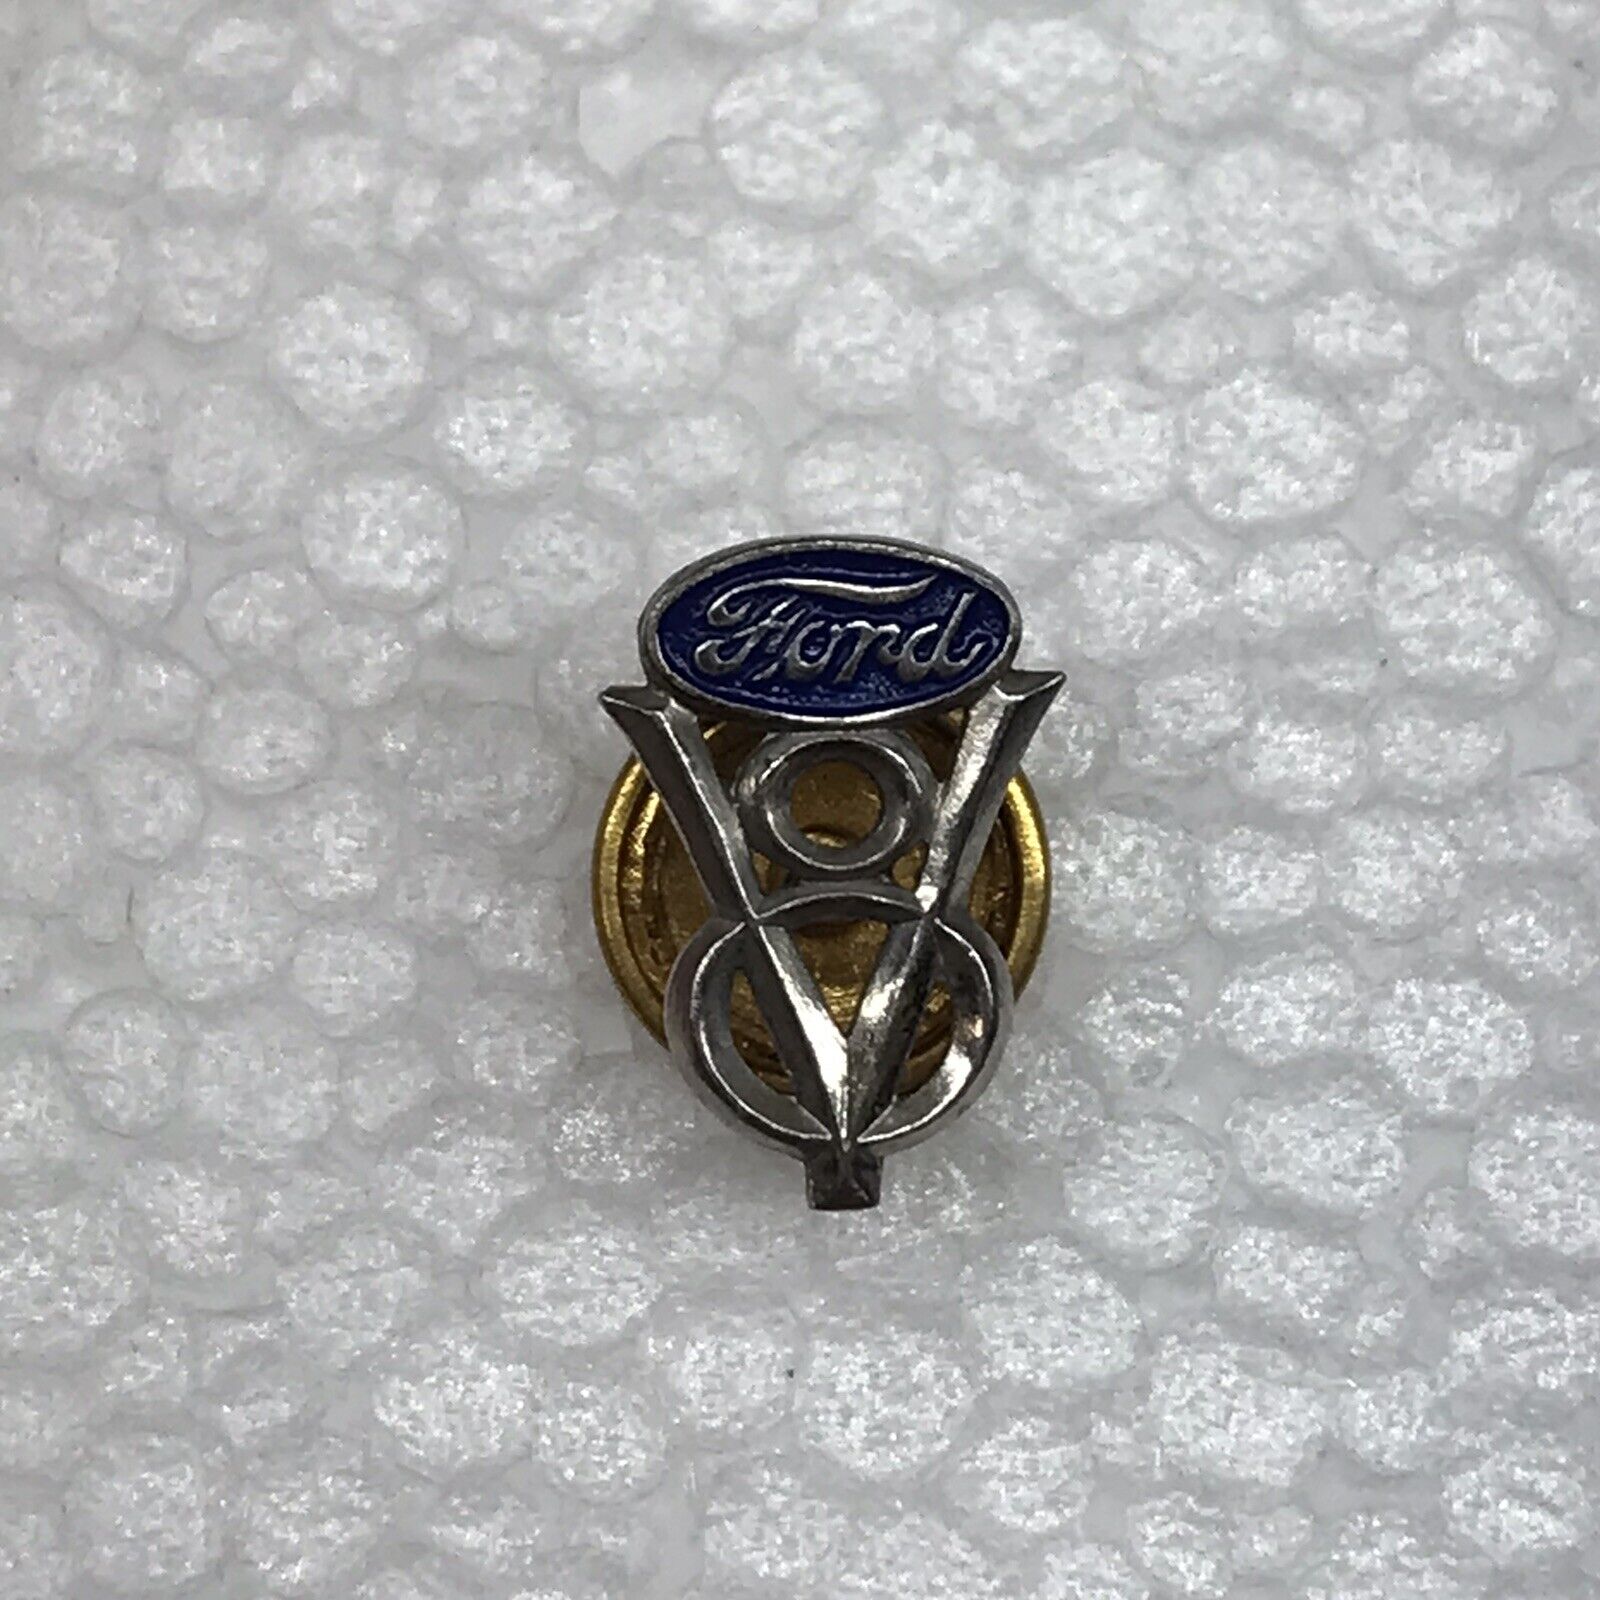 Vintage Ford V8 Logo emblem screw back lapel pin accessory